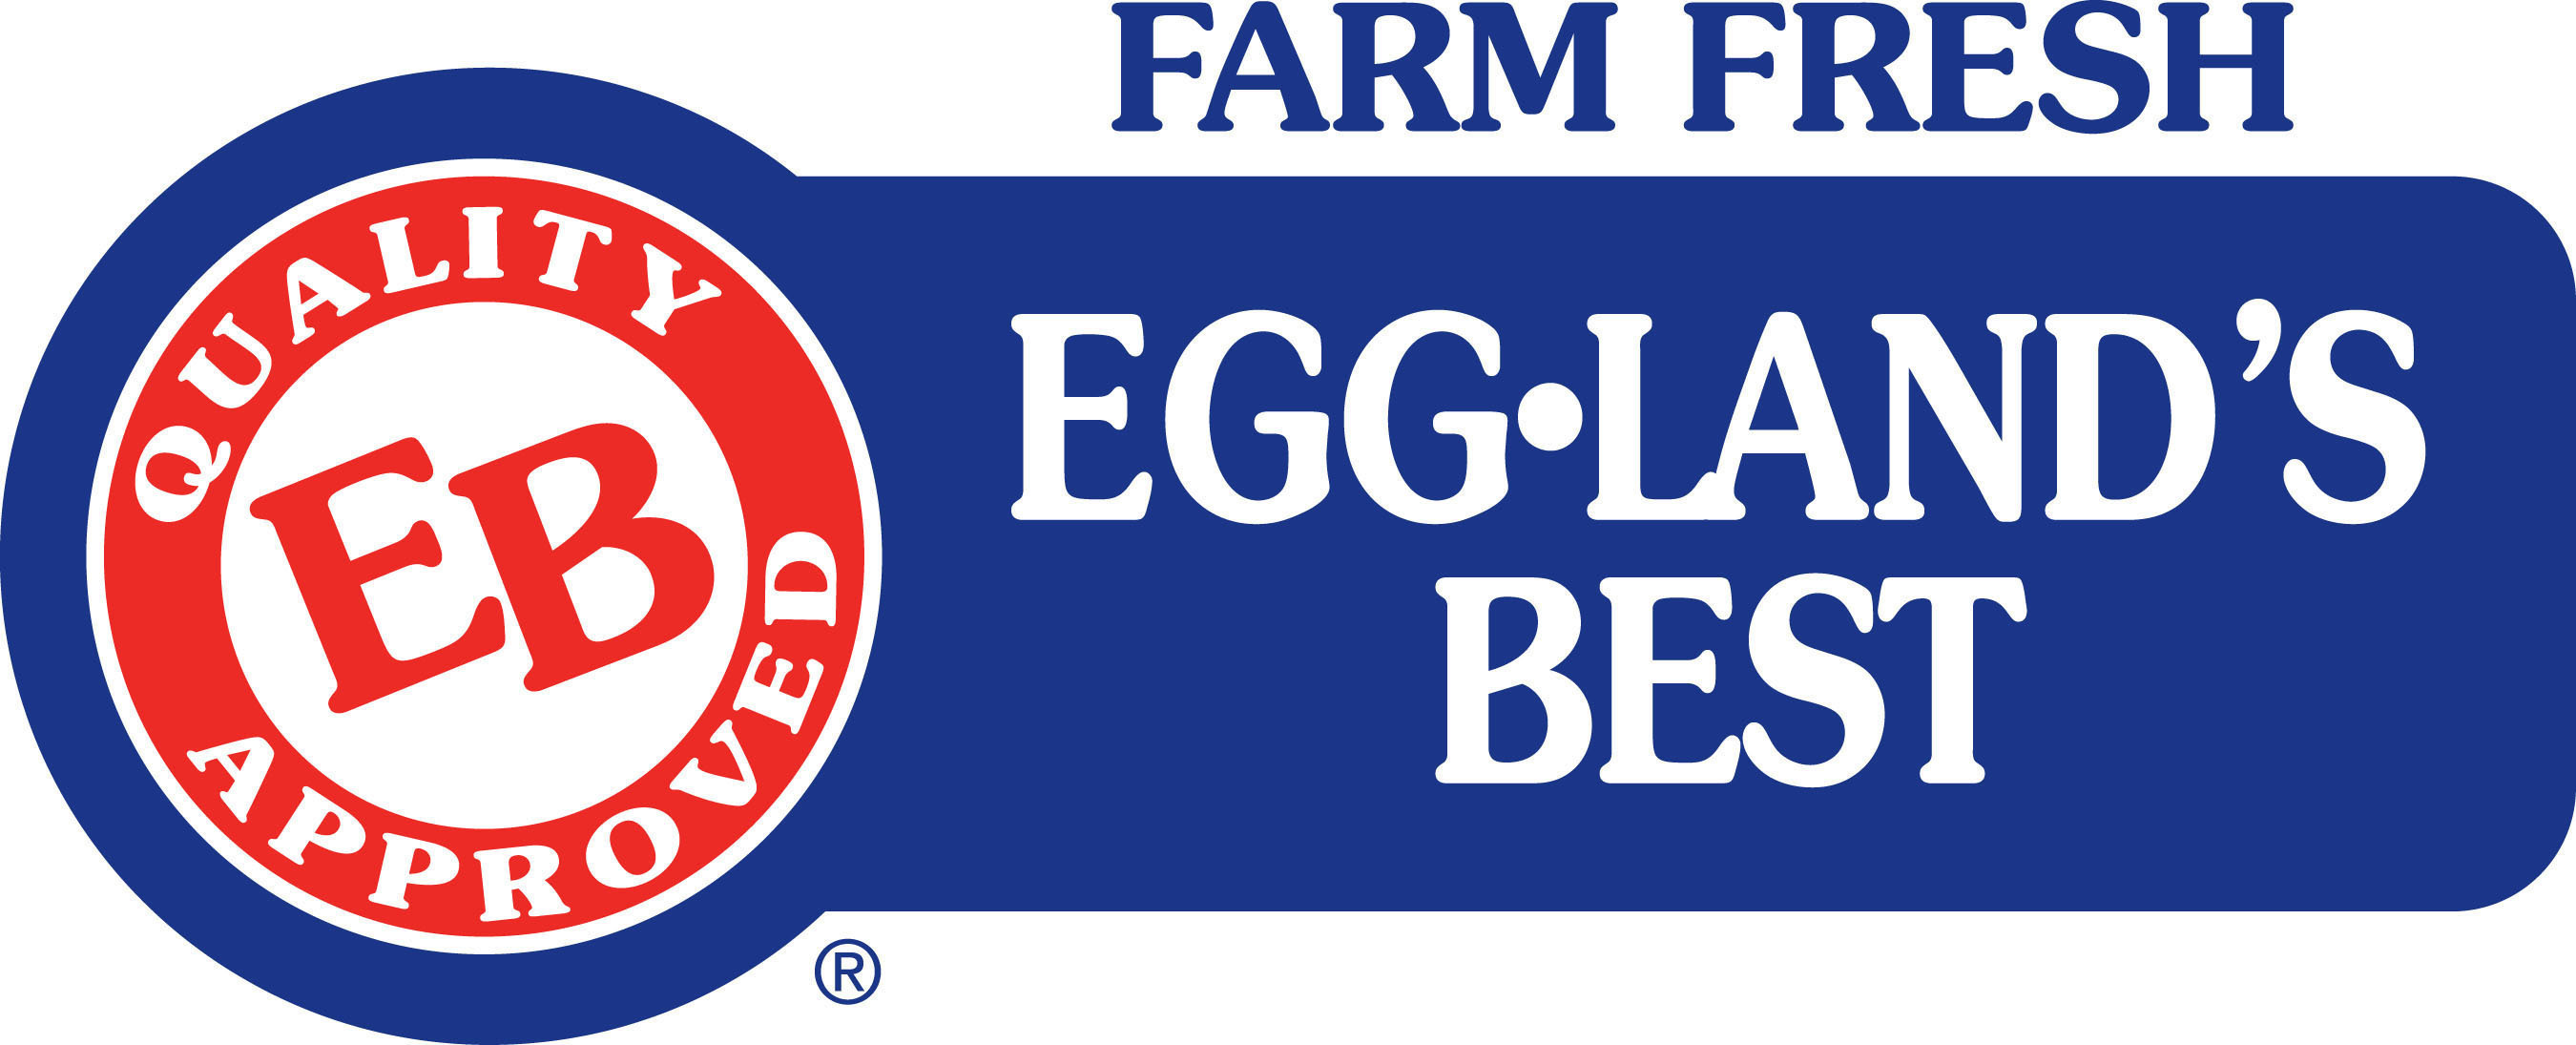 Eggland's Best logo.